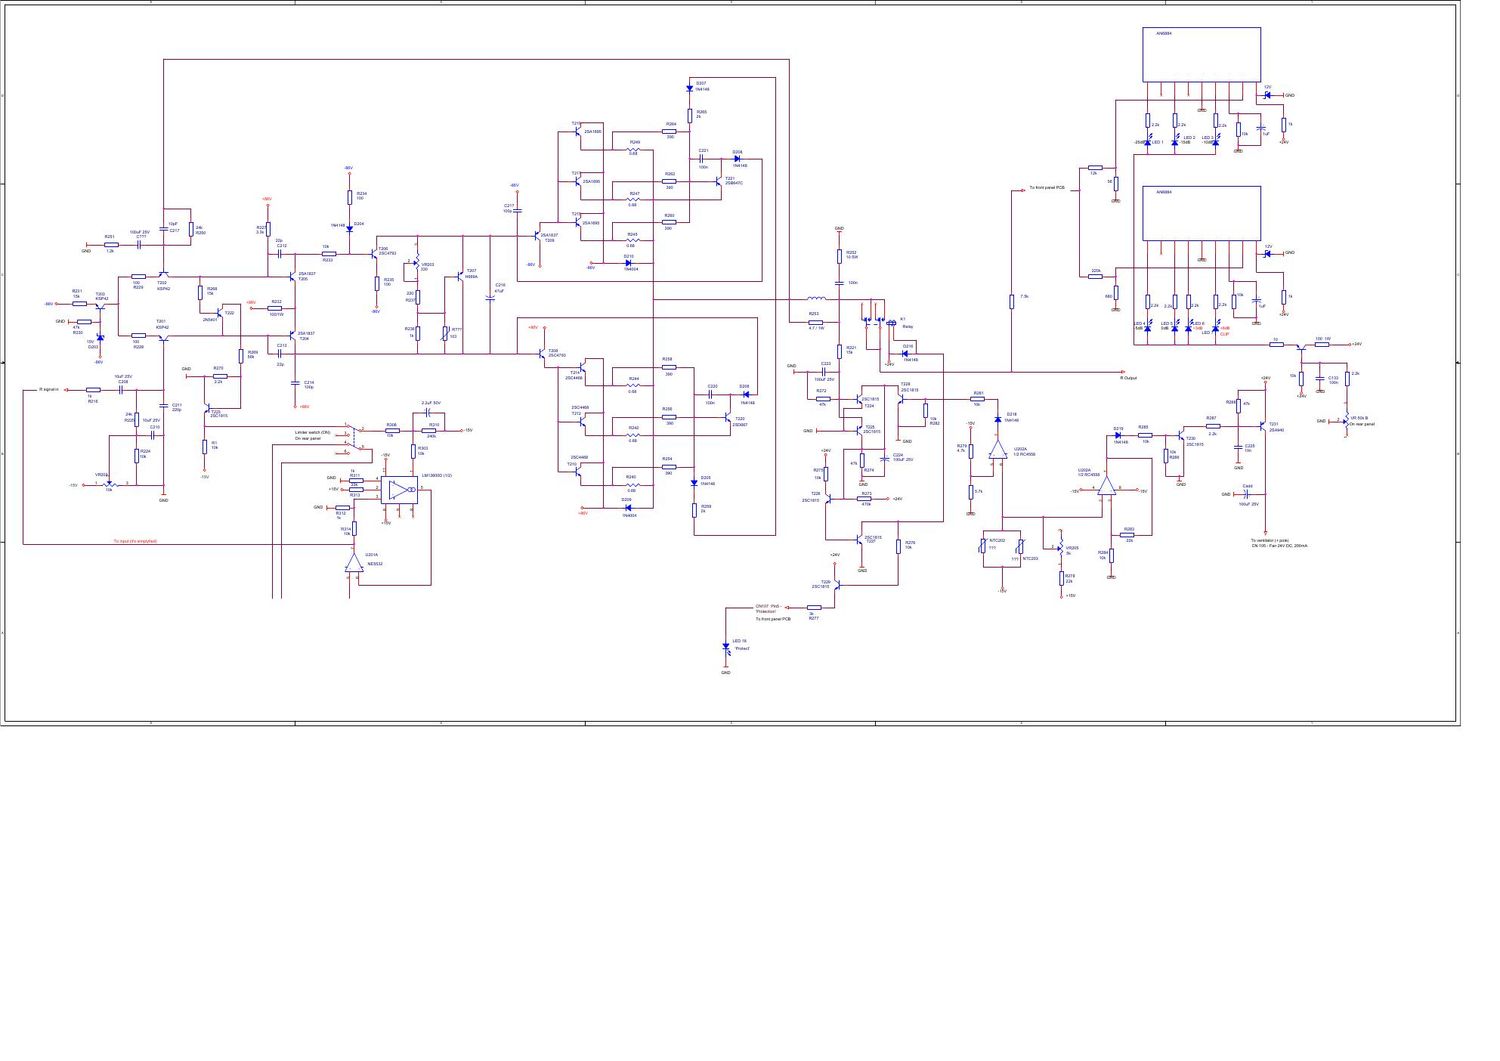 omnitronic p1500 schematic